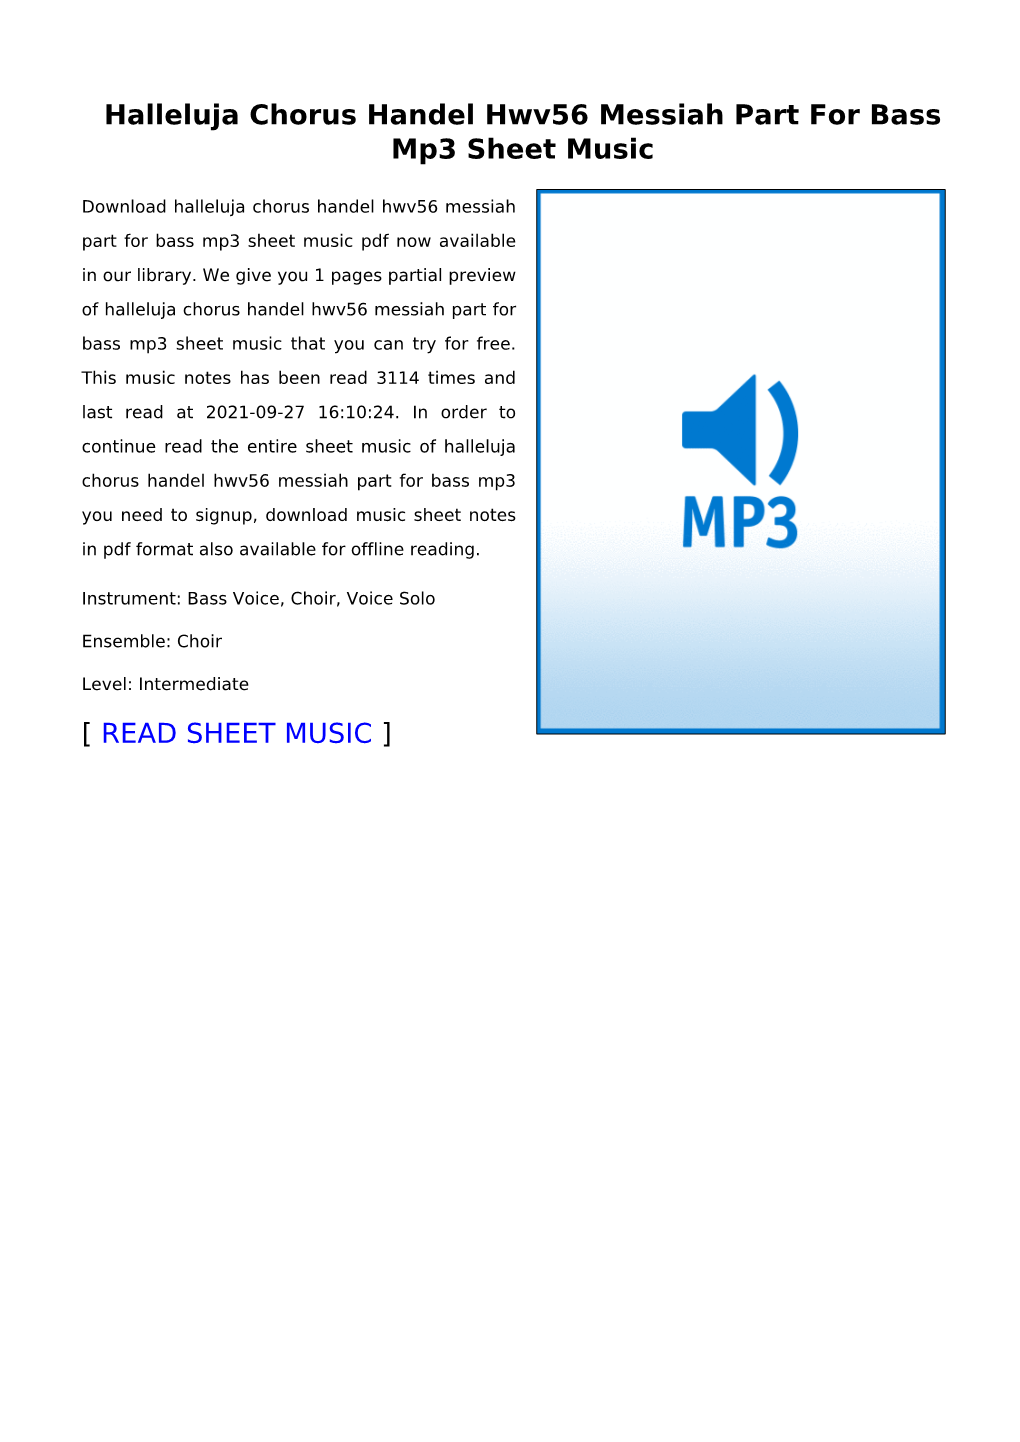 Halleluja Chorus Handel Hwv56 Messiah Part for Bass Mp3 Sheet Music